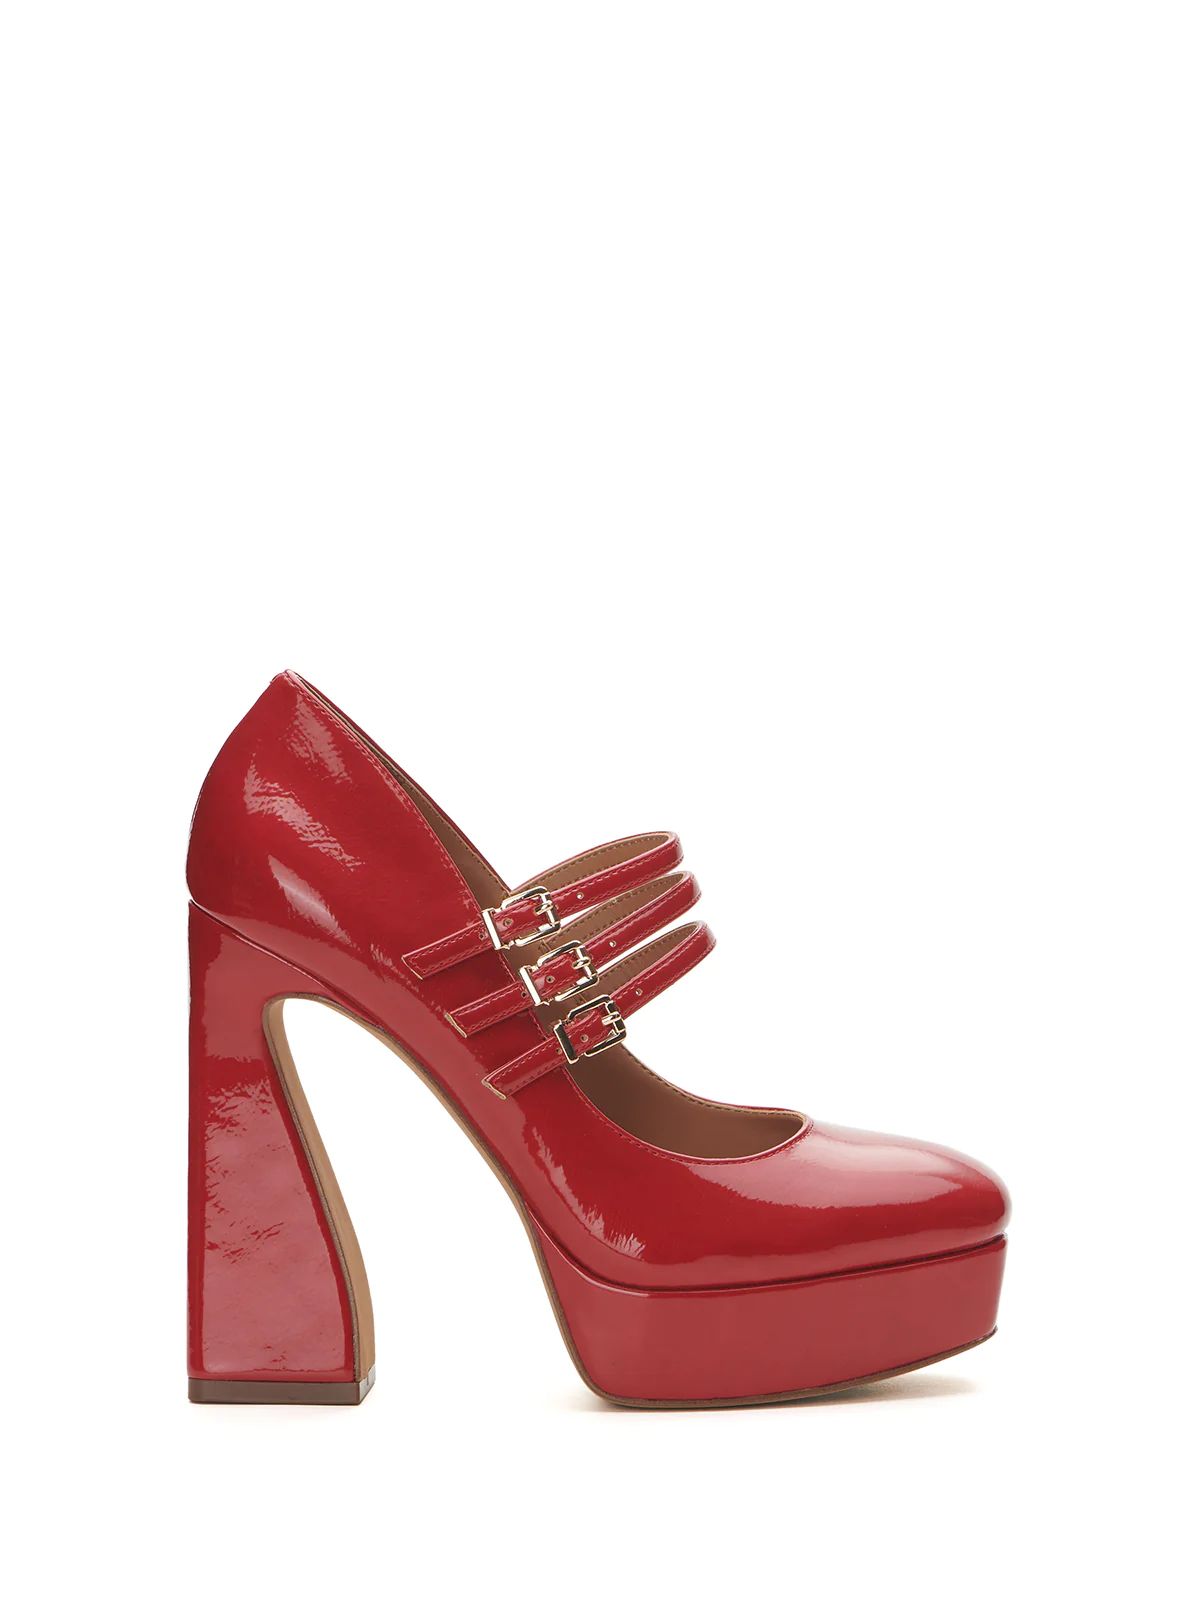 Darena High Heel in Richest Red | Jessica Simpson E Commerce